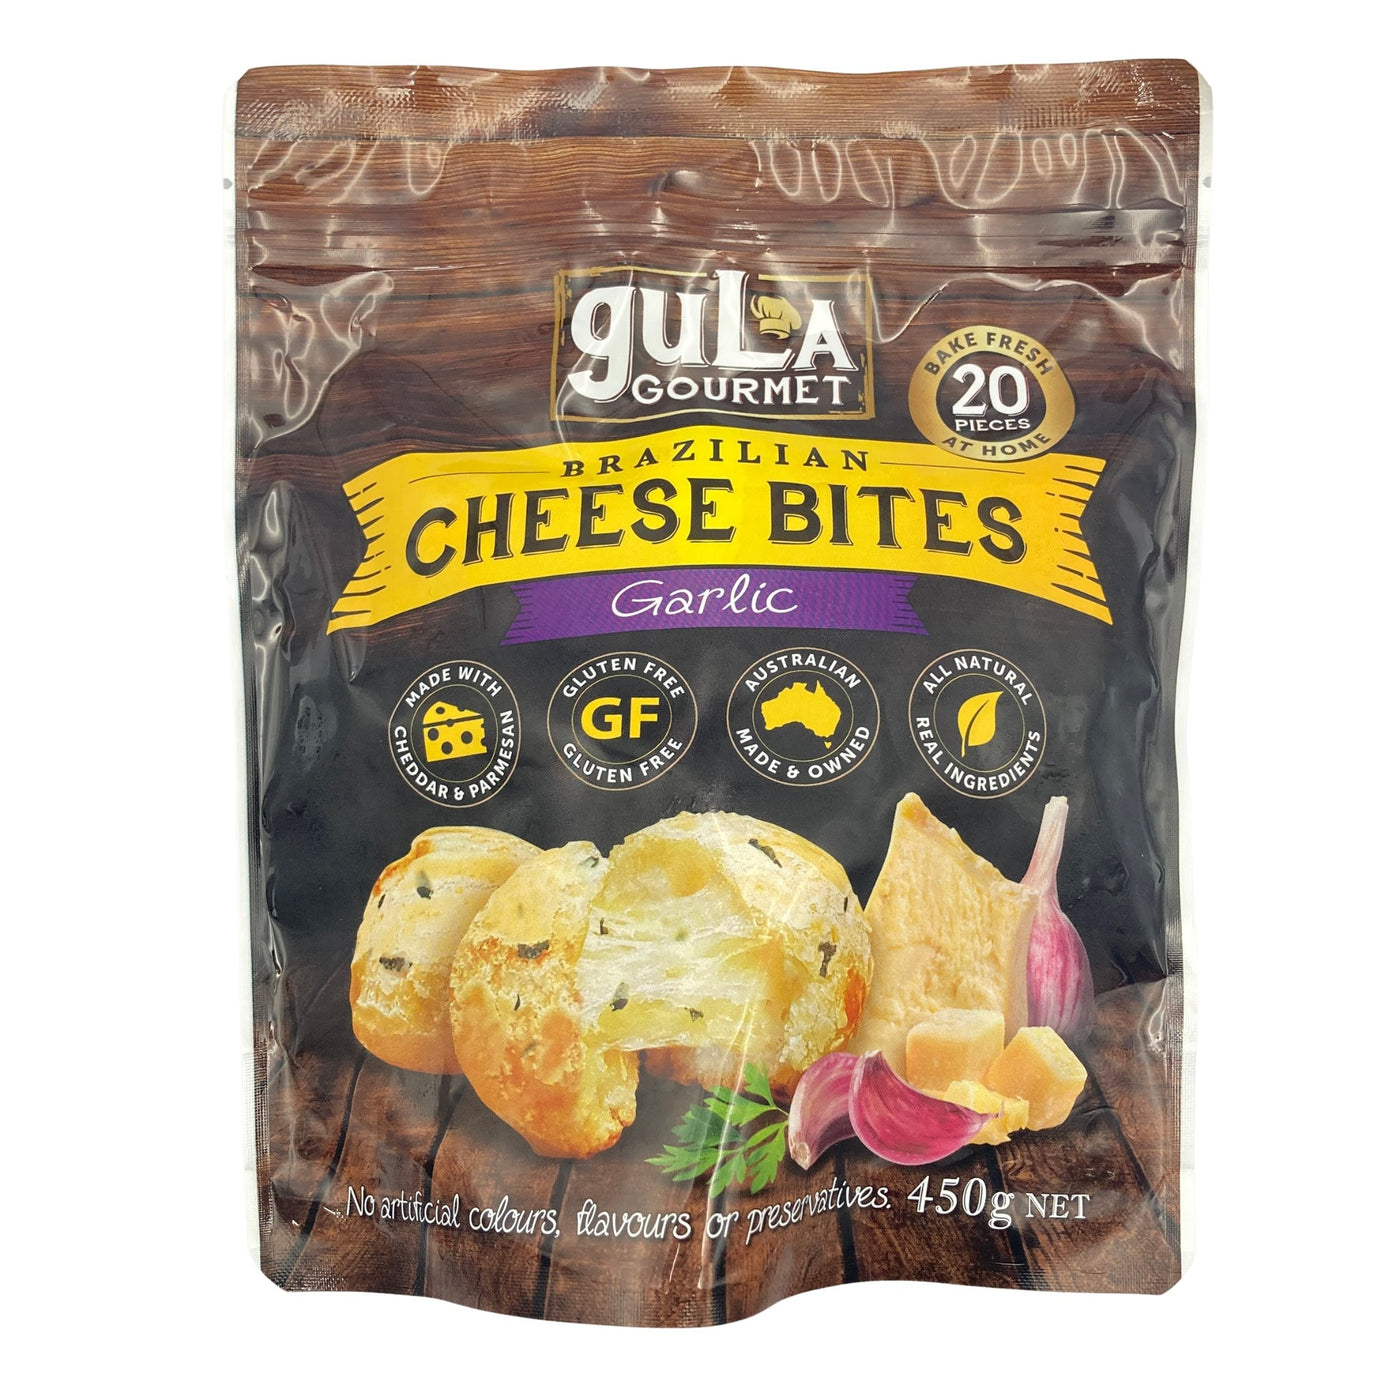 Gula Gourmet Brazilian Garlic Cheese Bites 450g